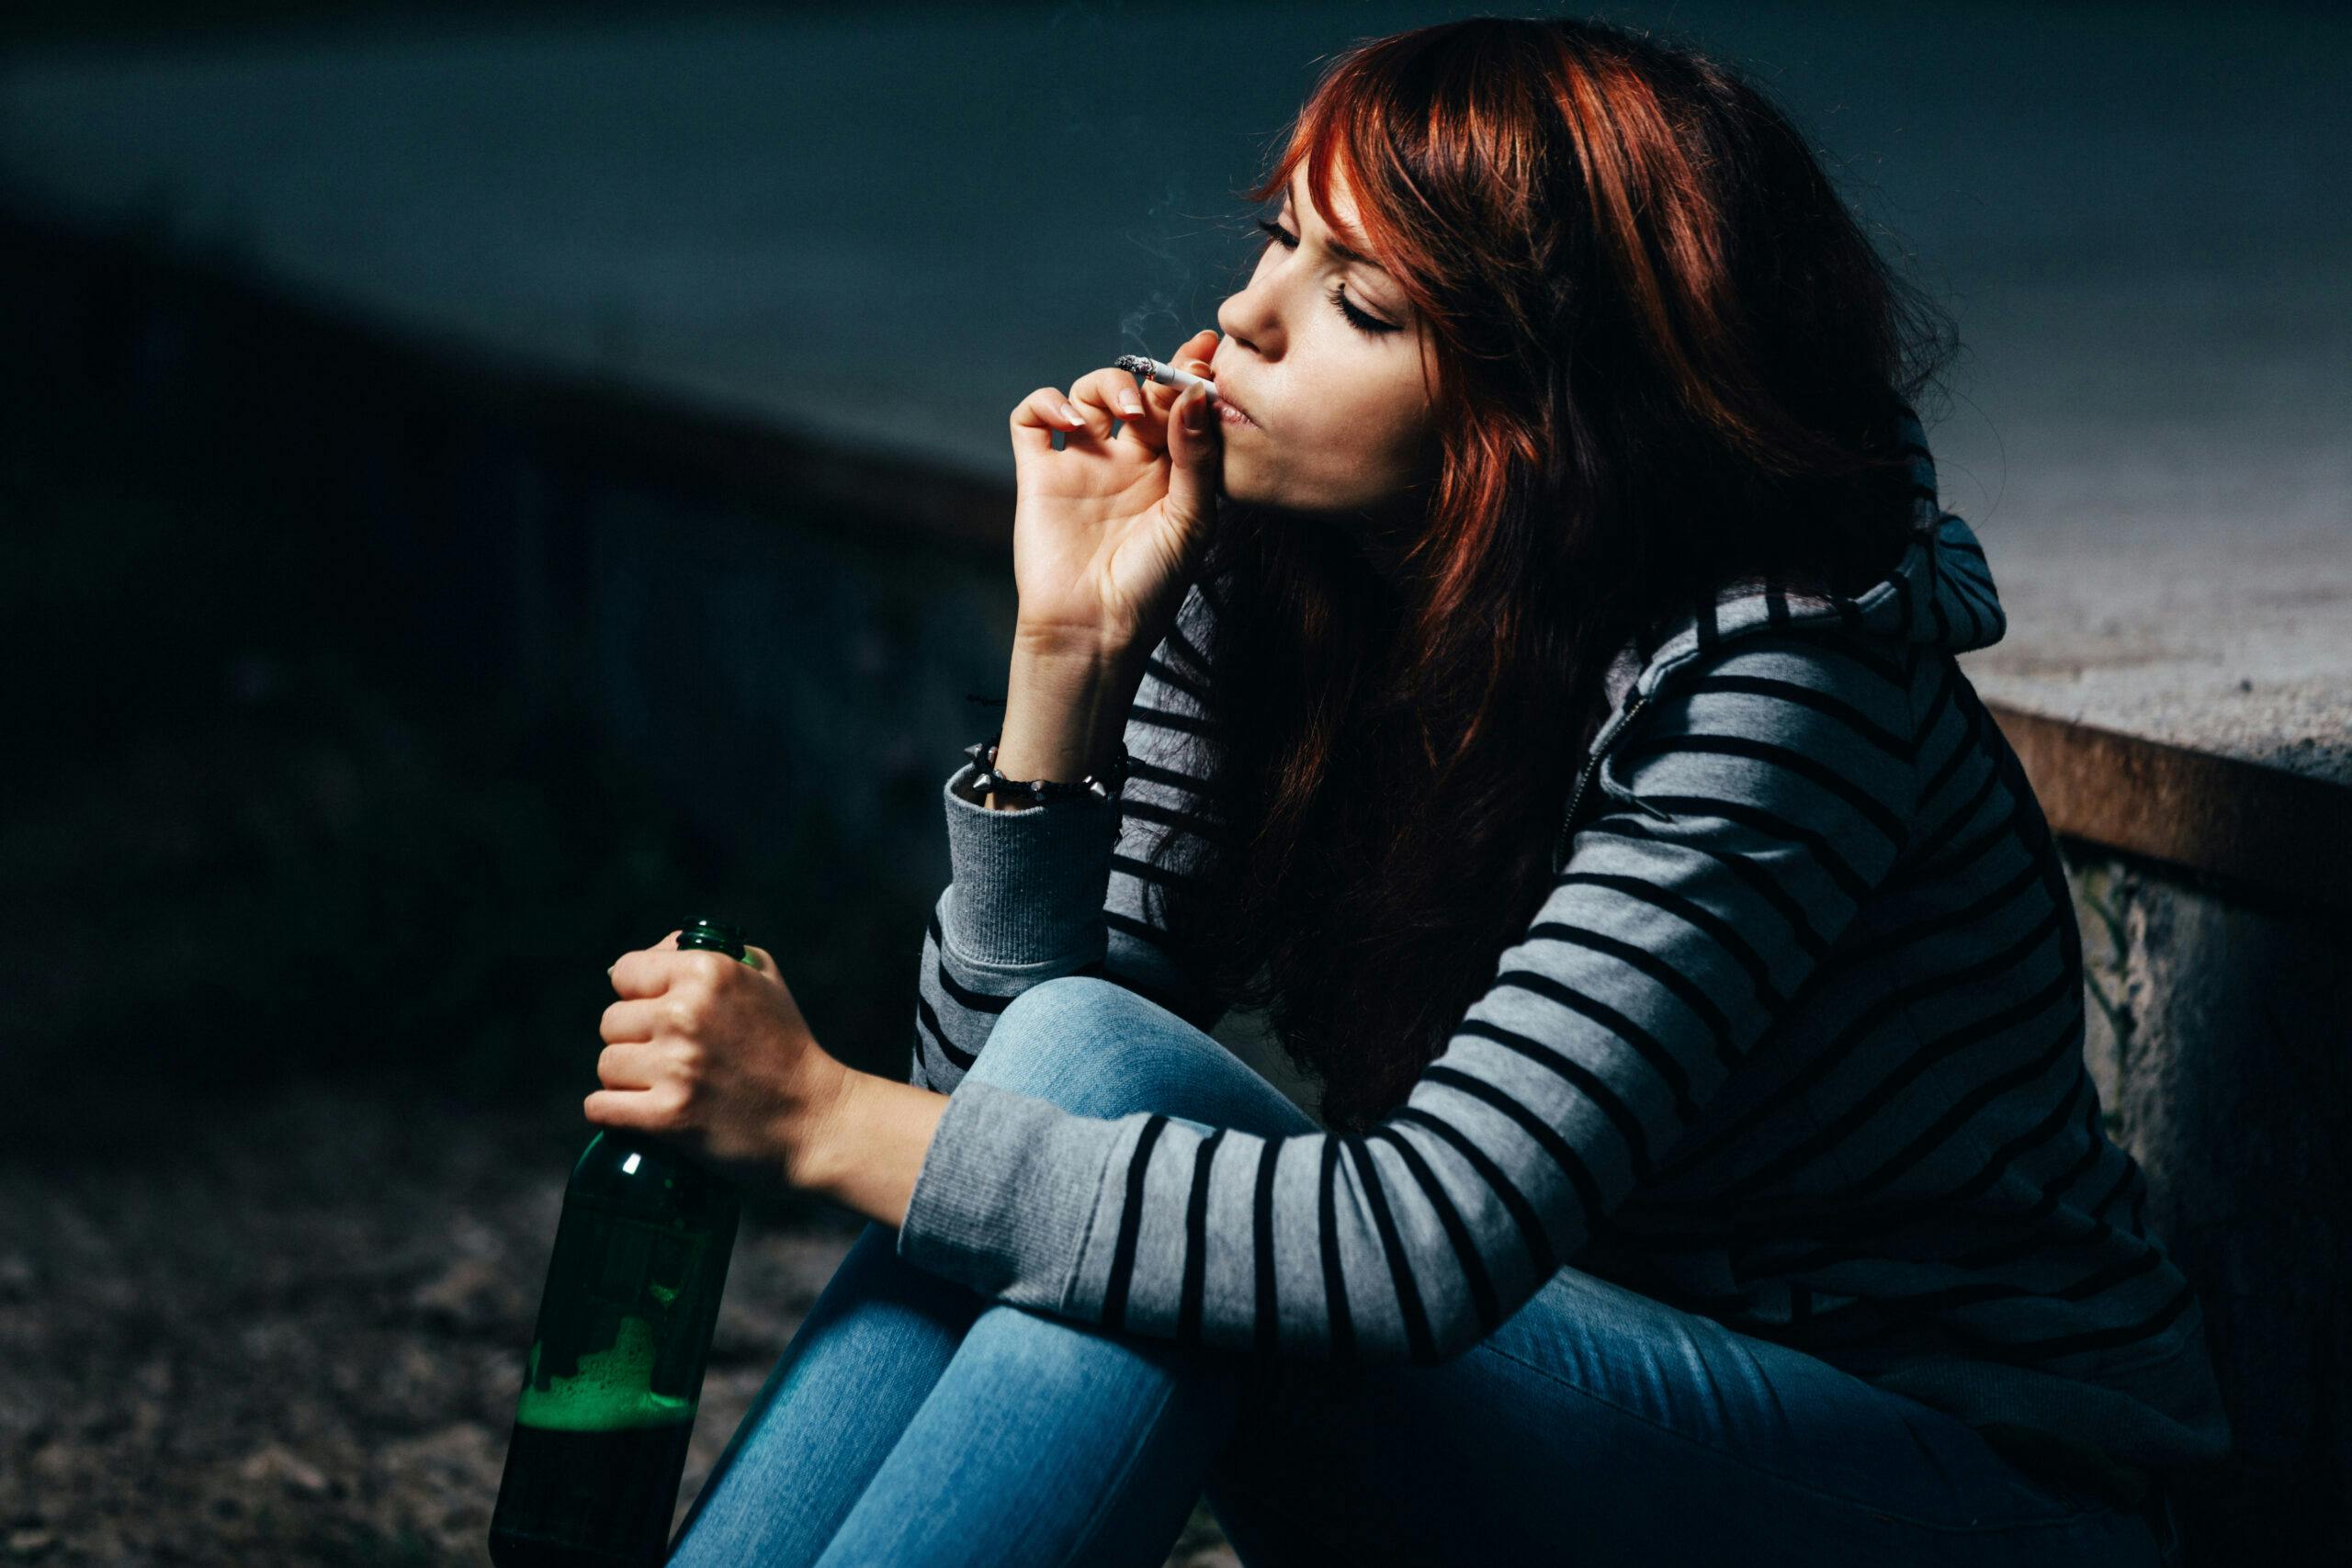 woman smoking marijuana joint and drinking beer